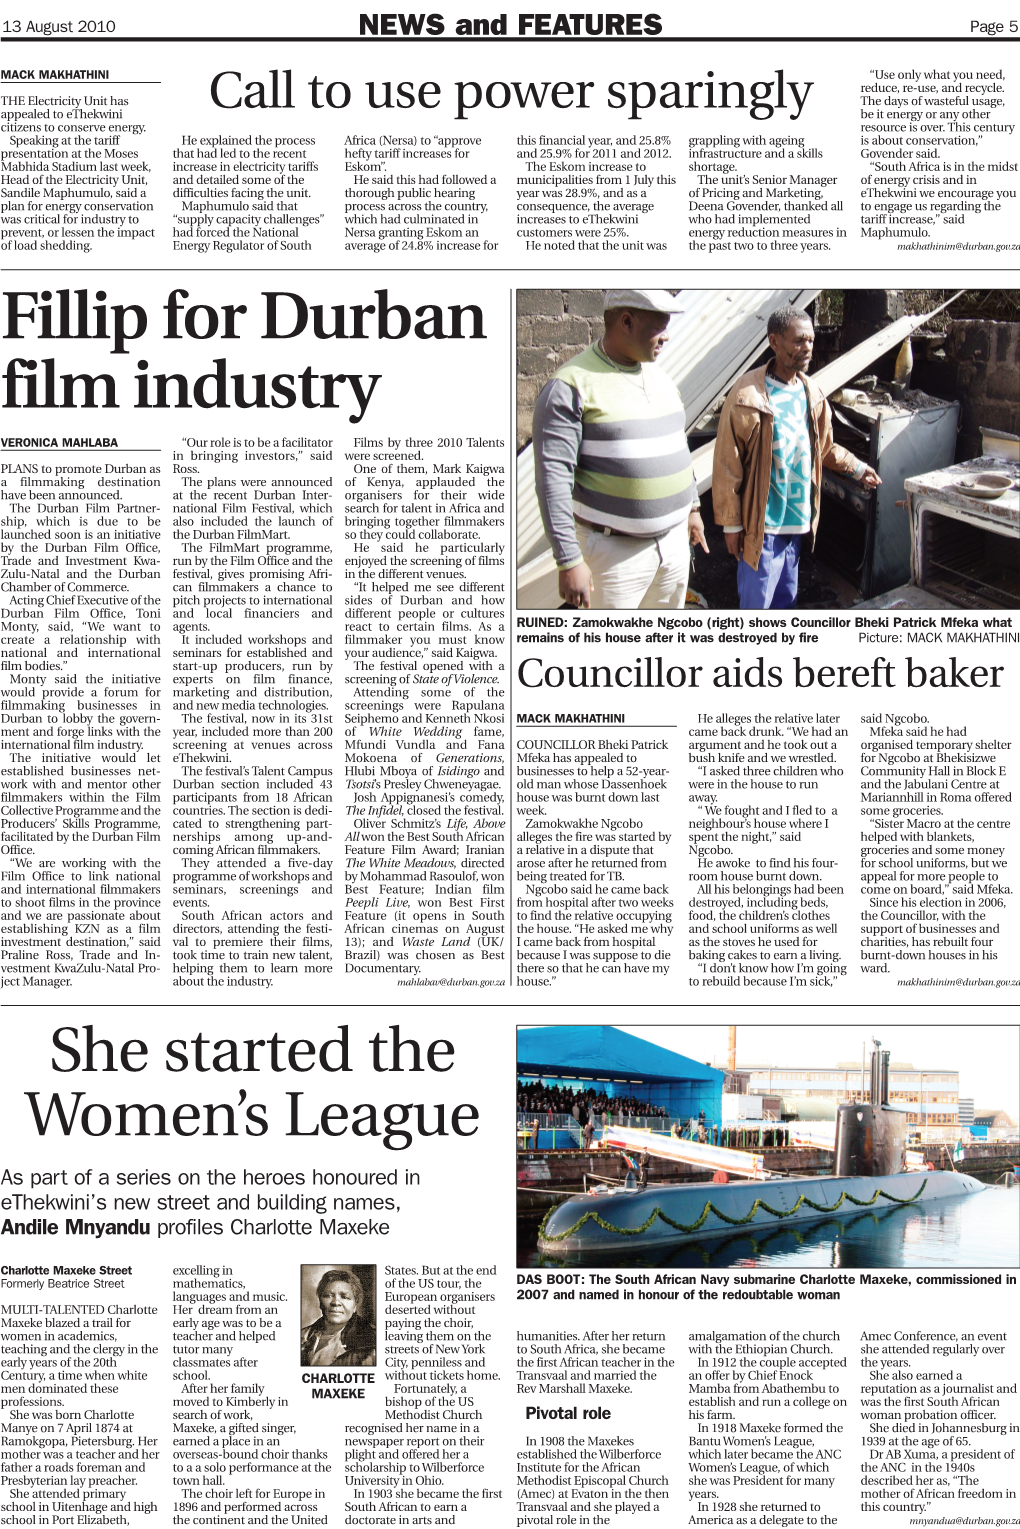 Fillip for Durban Film Industry